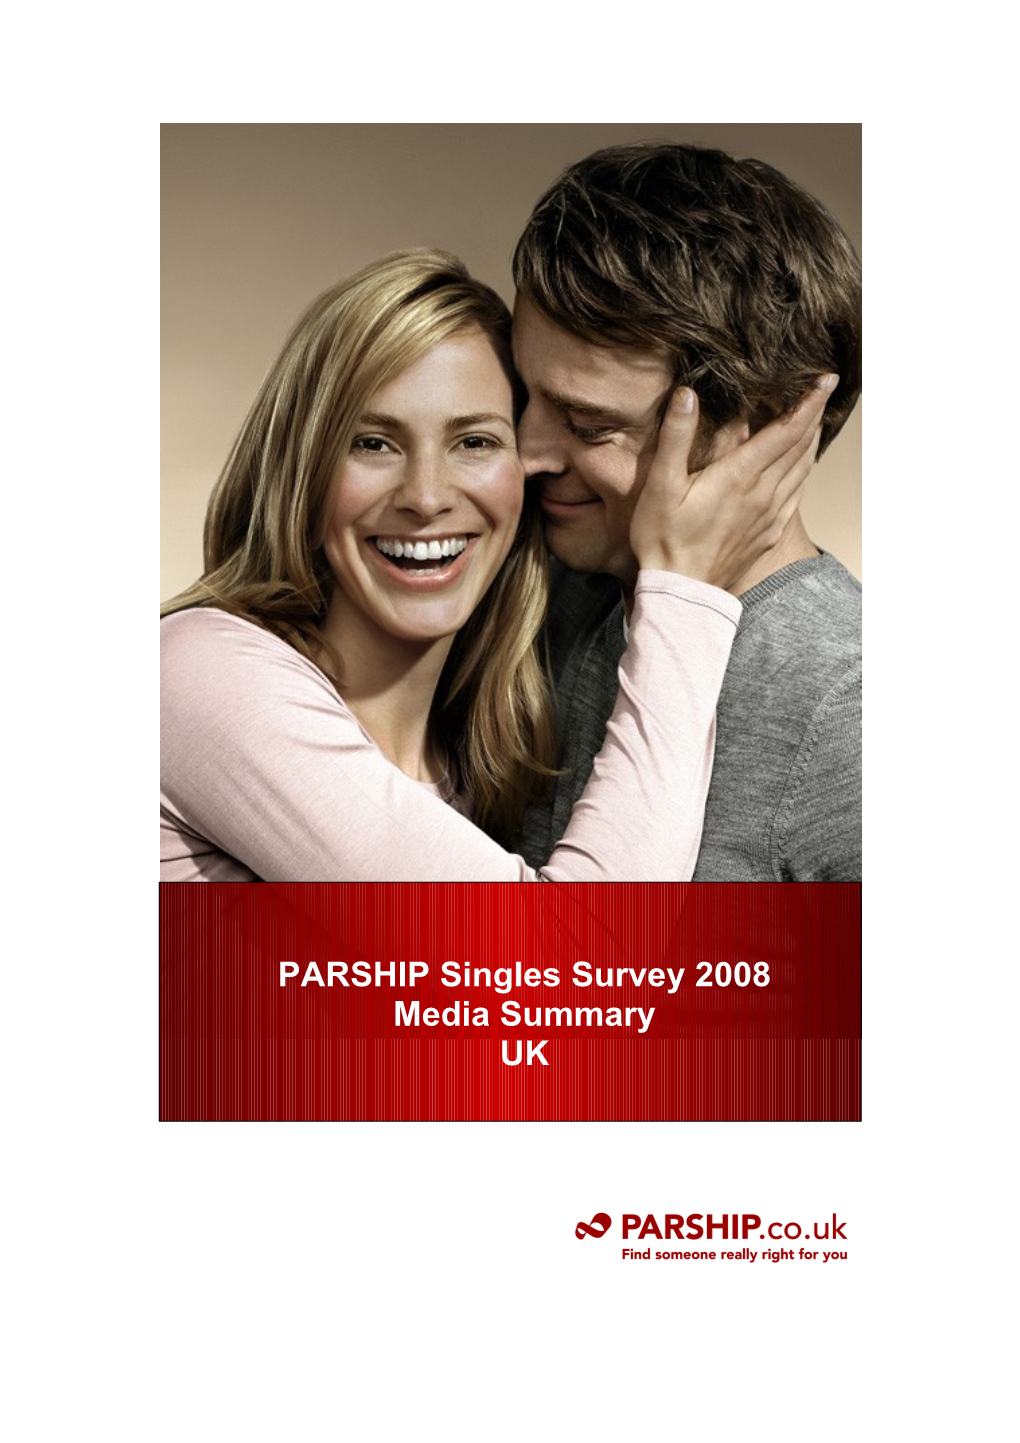 Download the Parship Singles Survey UK 2008